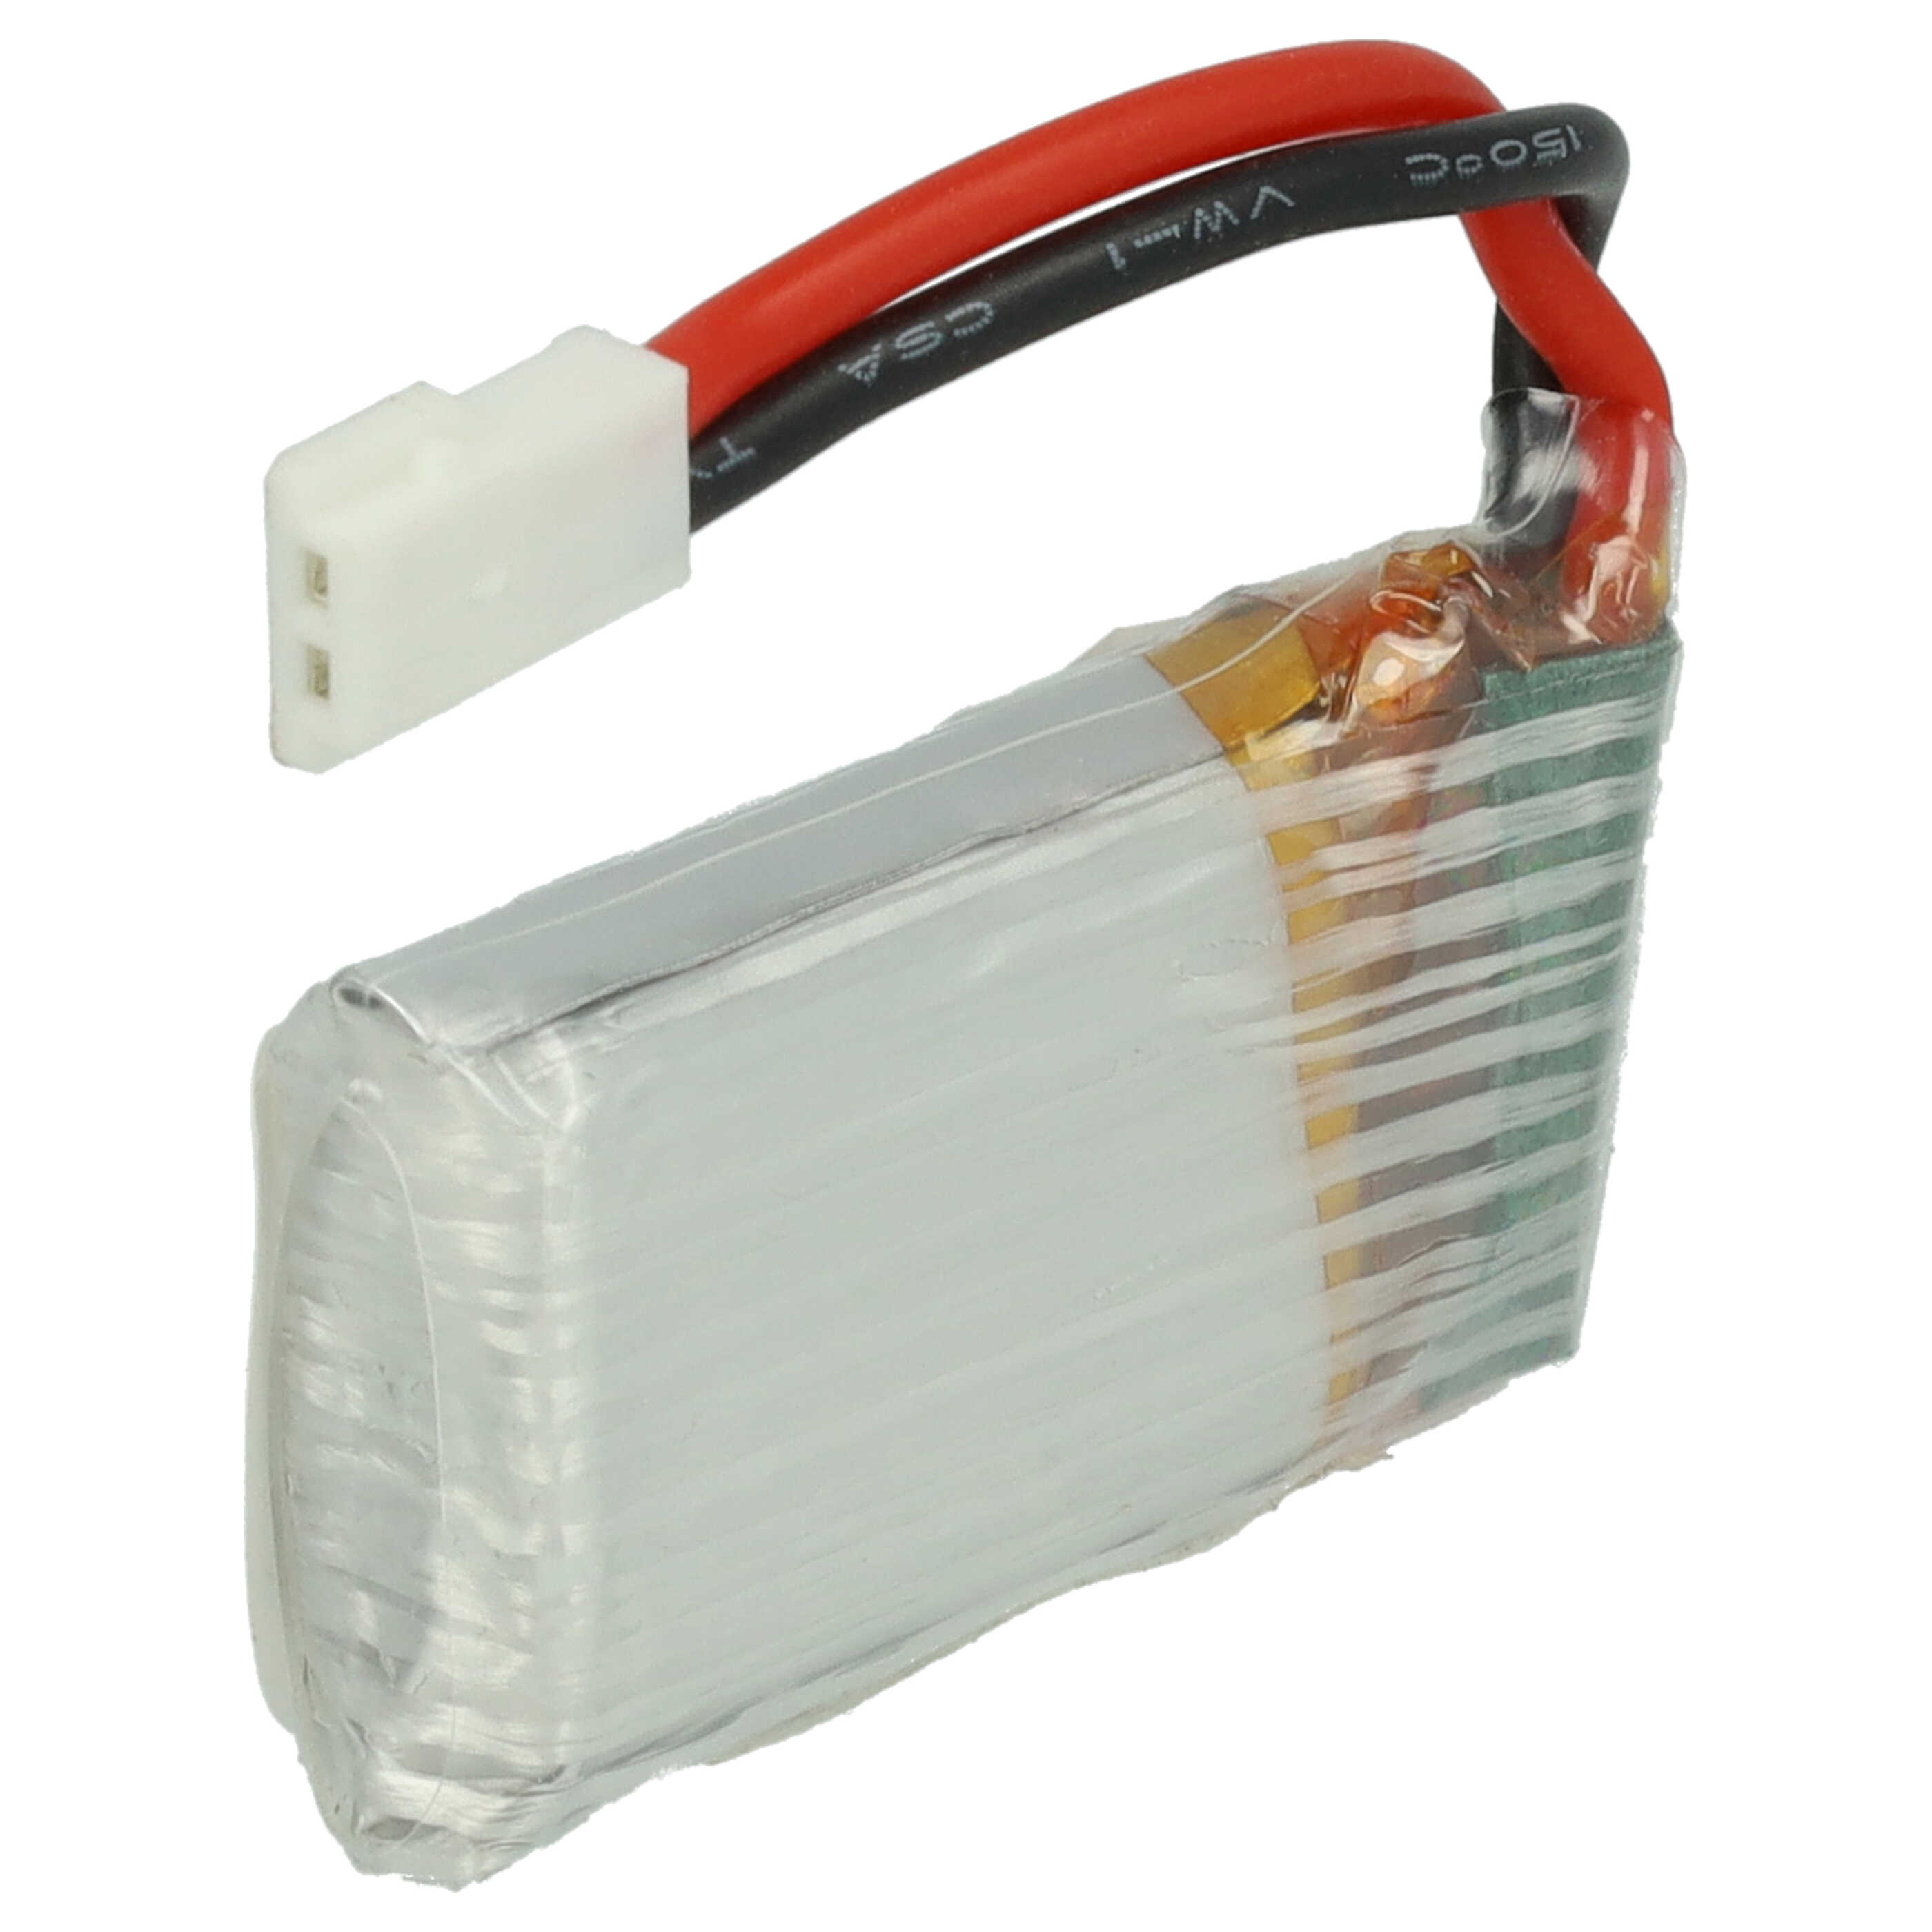 Batterie pour modèle radio-télécommandé - 350mAh 3,7V Li-polymère, XH 2.54 (AWG 20)